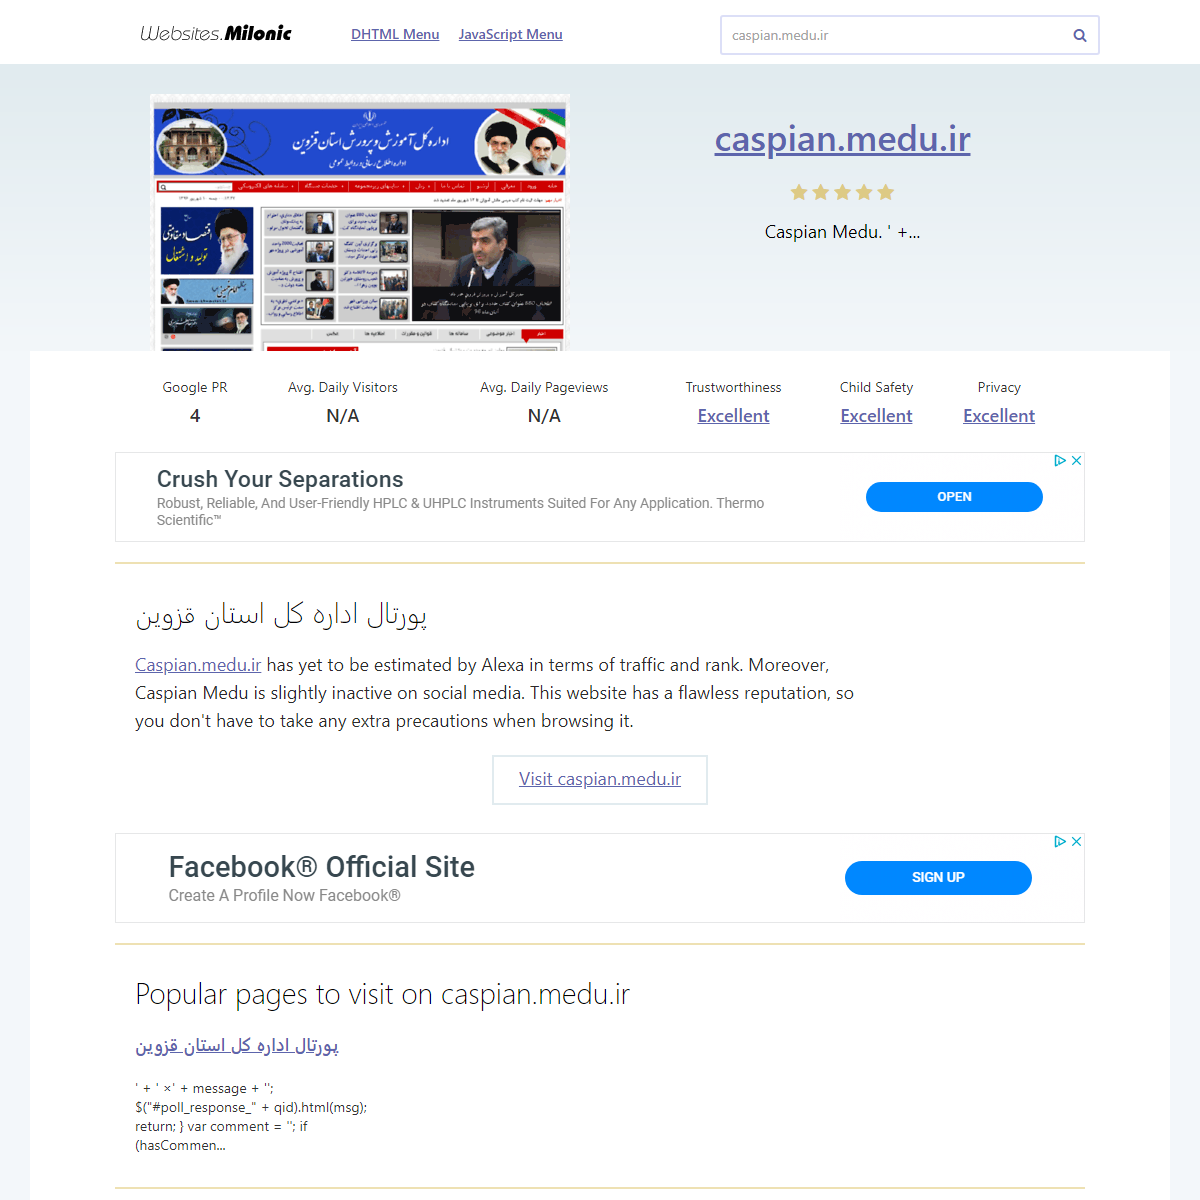 Caspian.medu.ir website. Ù¾ÙˆØ±ØªØ§Ù„ Ø§Ø¯Ø§Ø±Ù‡ Ú©Ù„ Ø§Ø³ØªØ§Ù† Ù‚Ø²ÙˆÛŒÙ†.